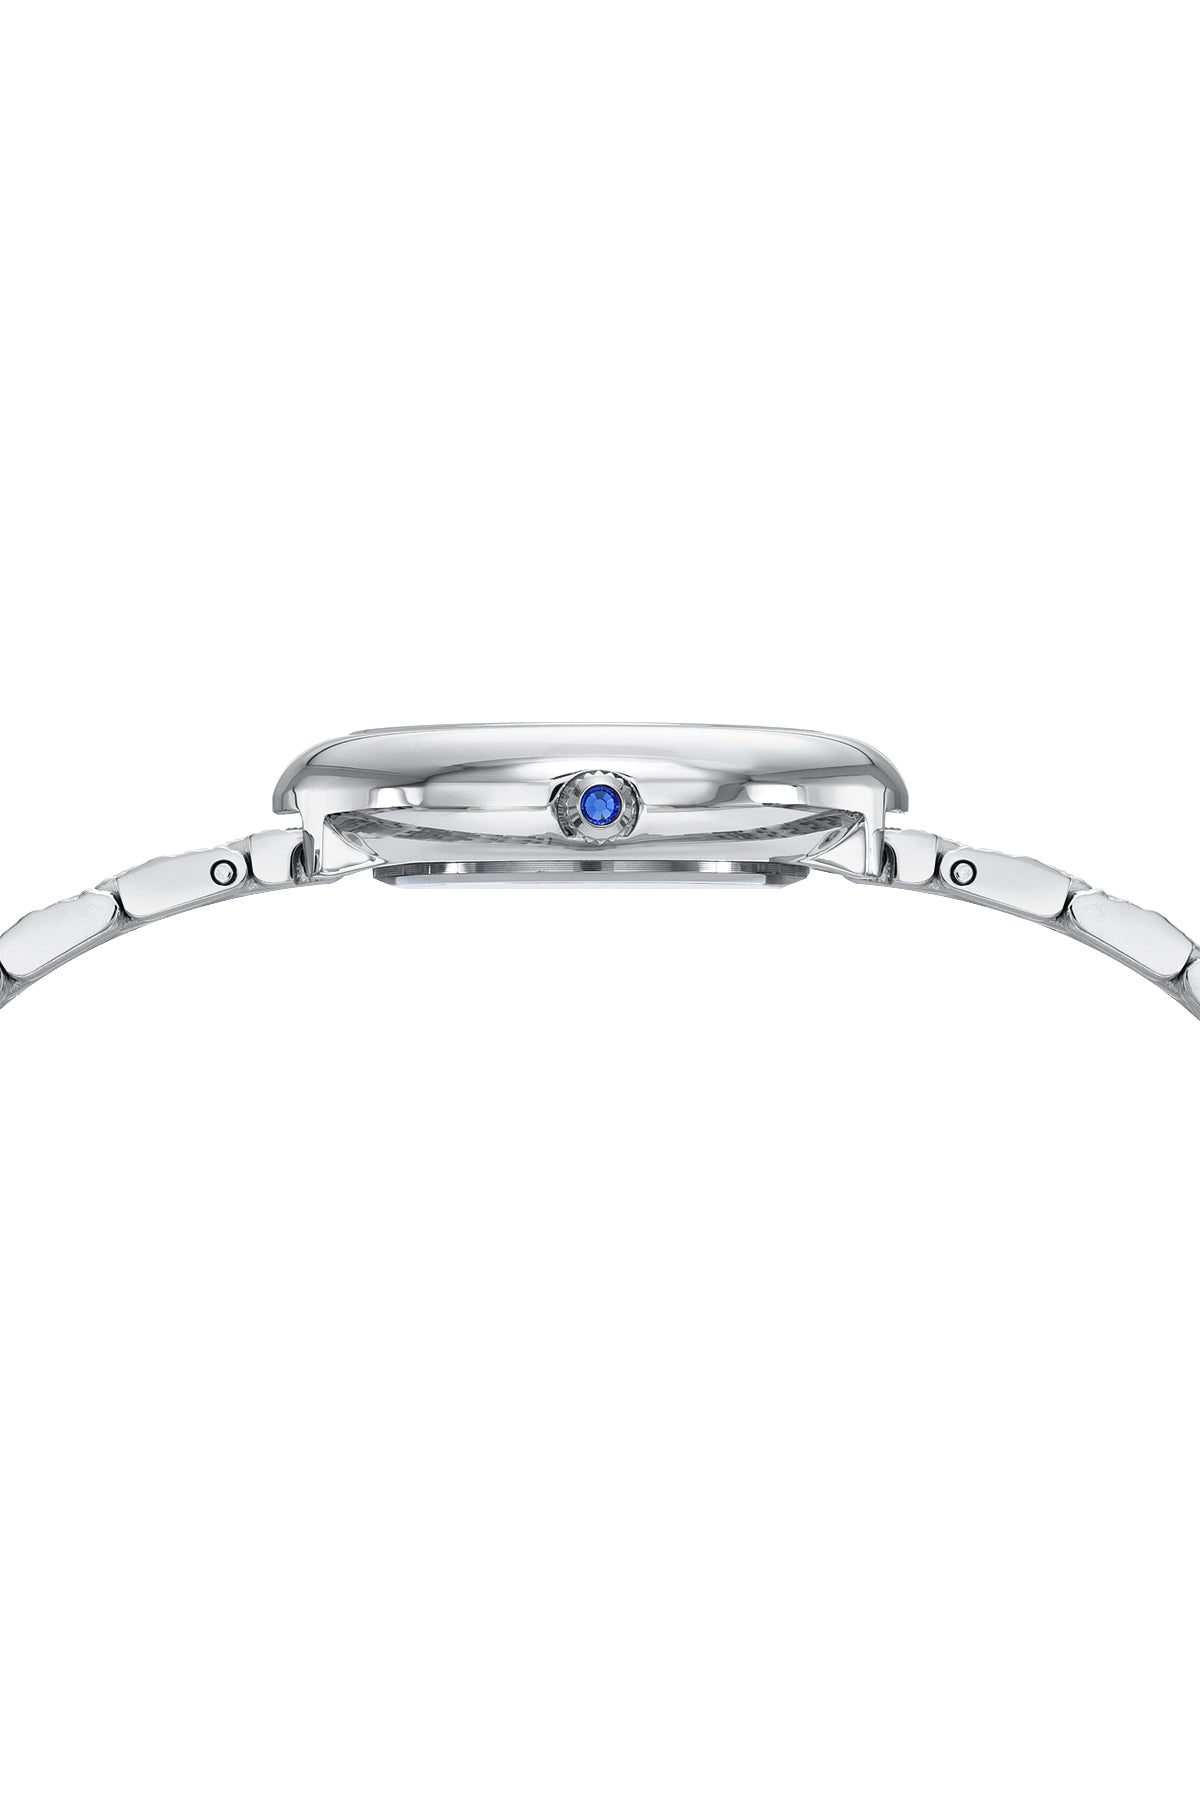 Porsamo Bleu Charlize Luxury Opal Women's Stainless Steel Watch, Silver 1111ACHS